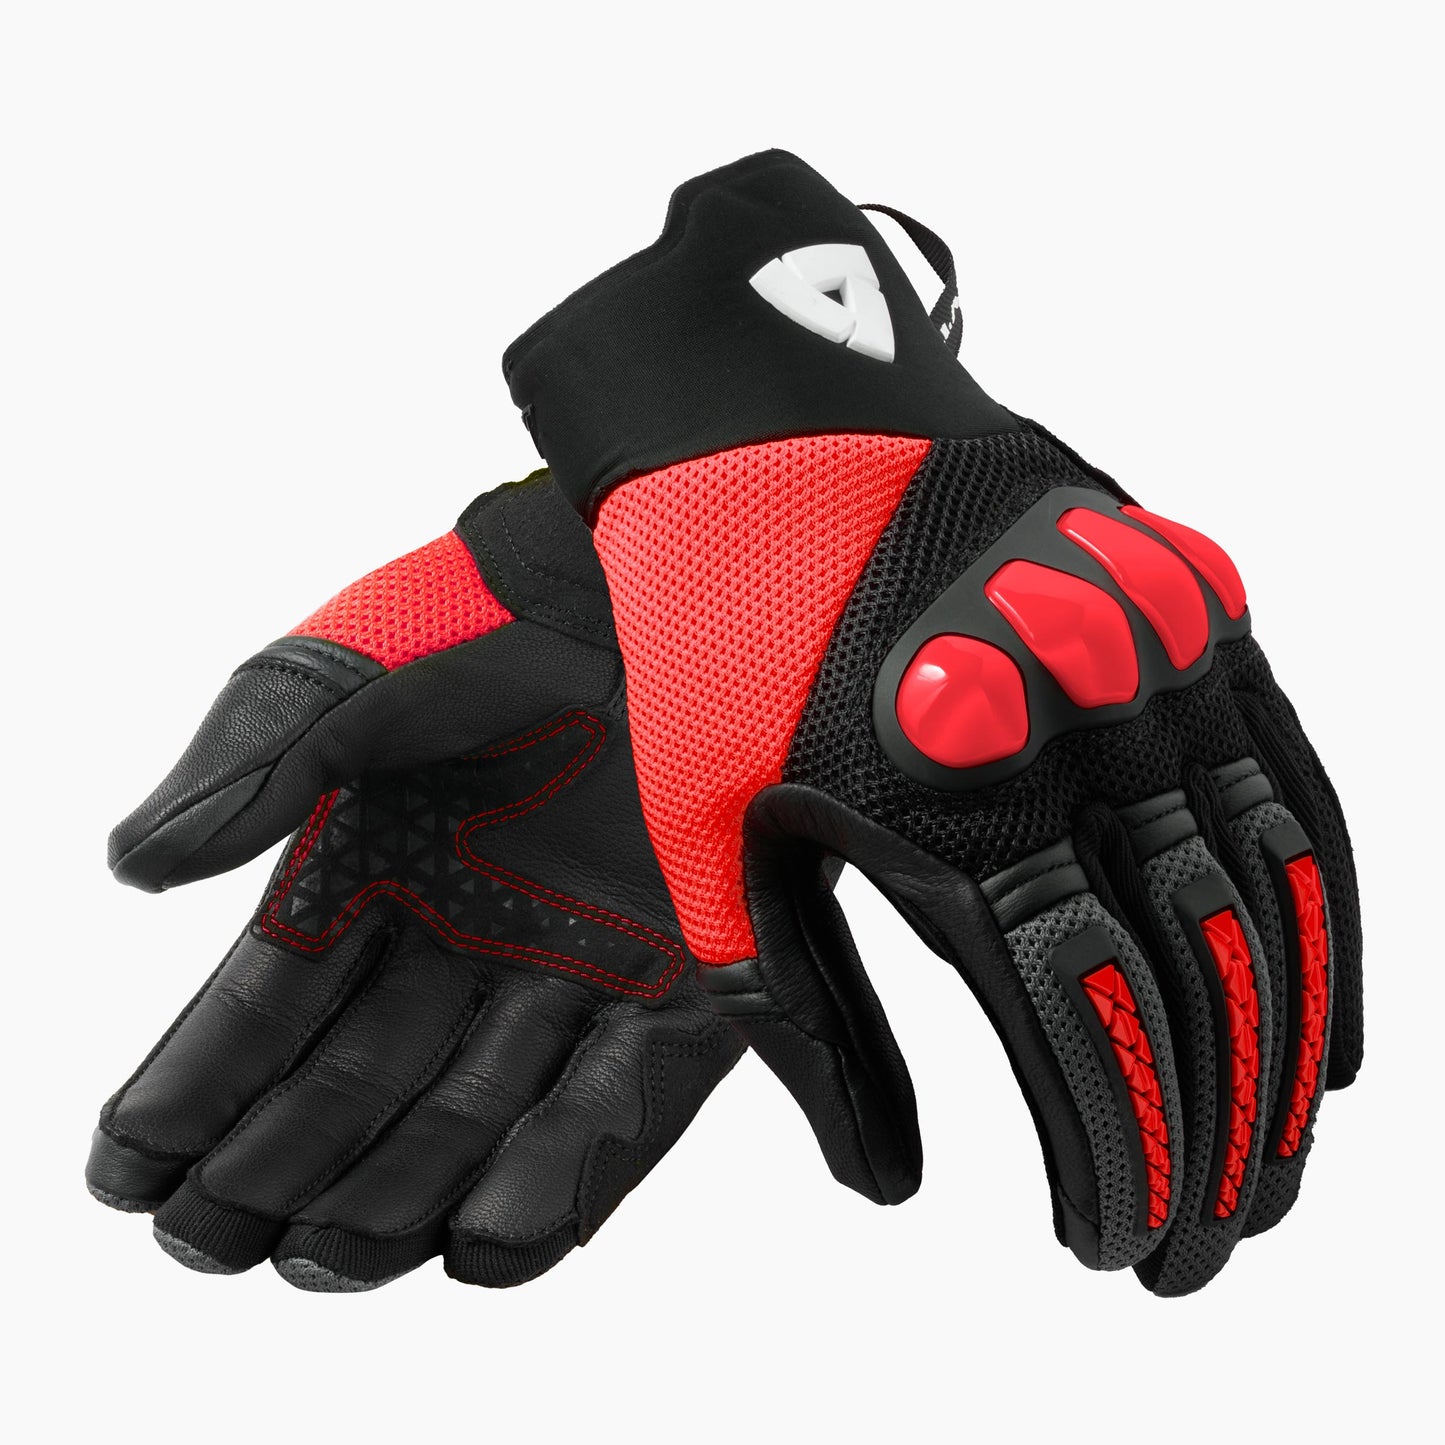 REV'IT Speedart Gloves